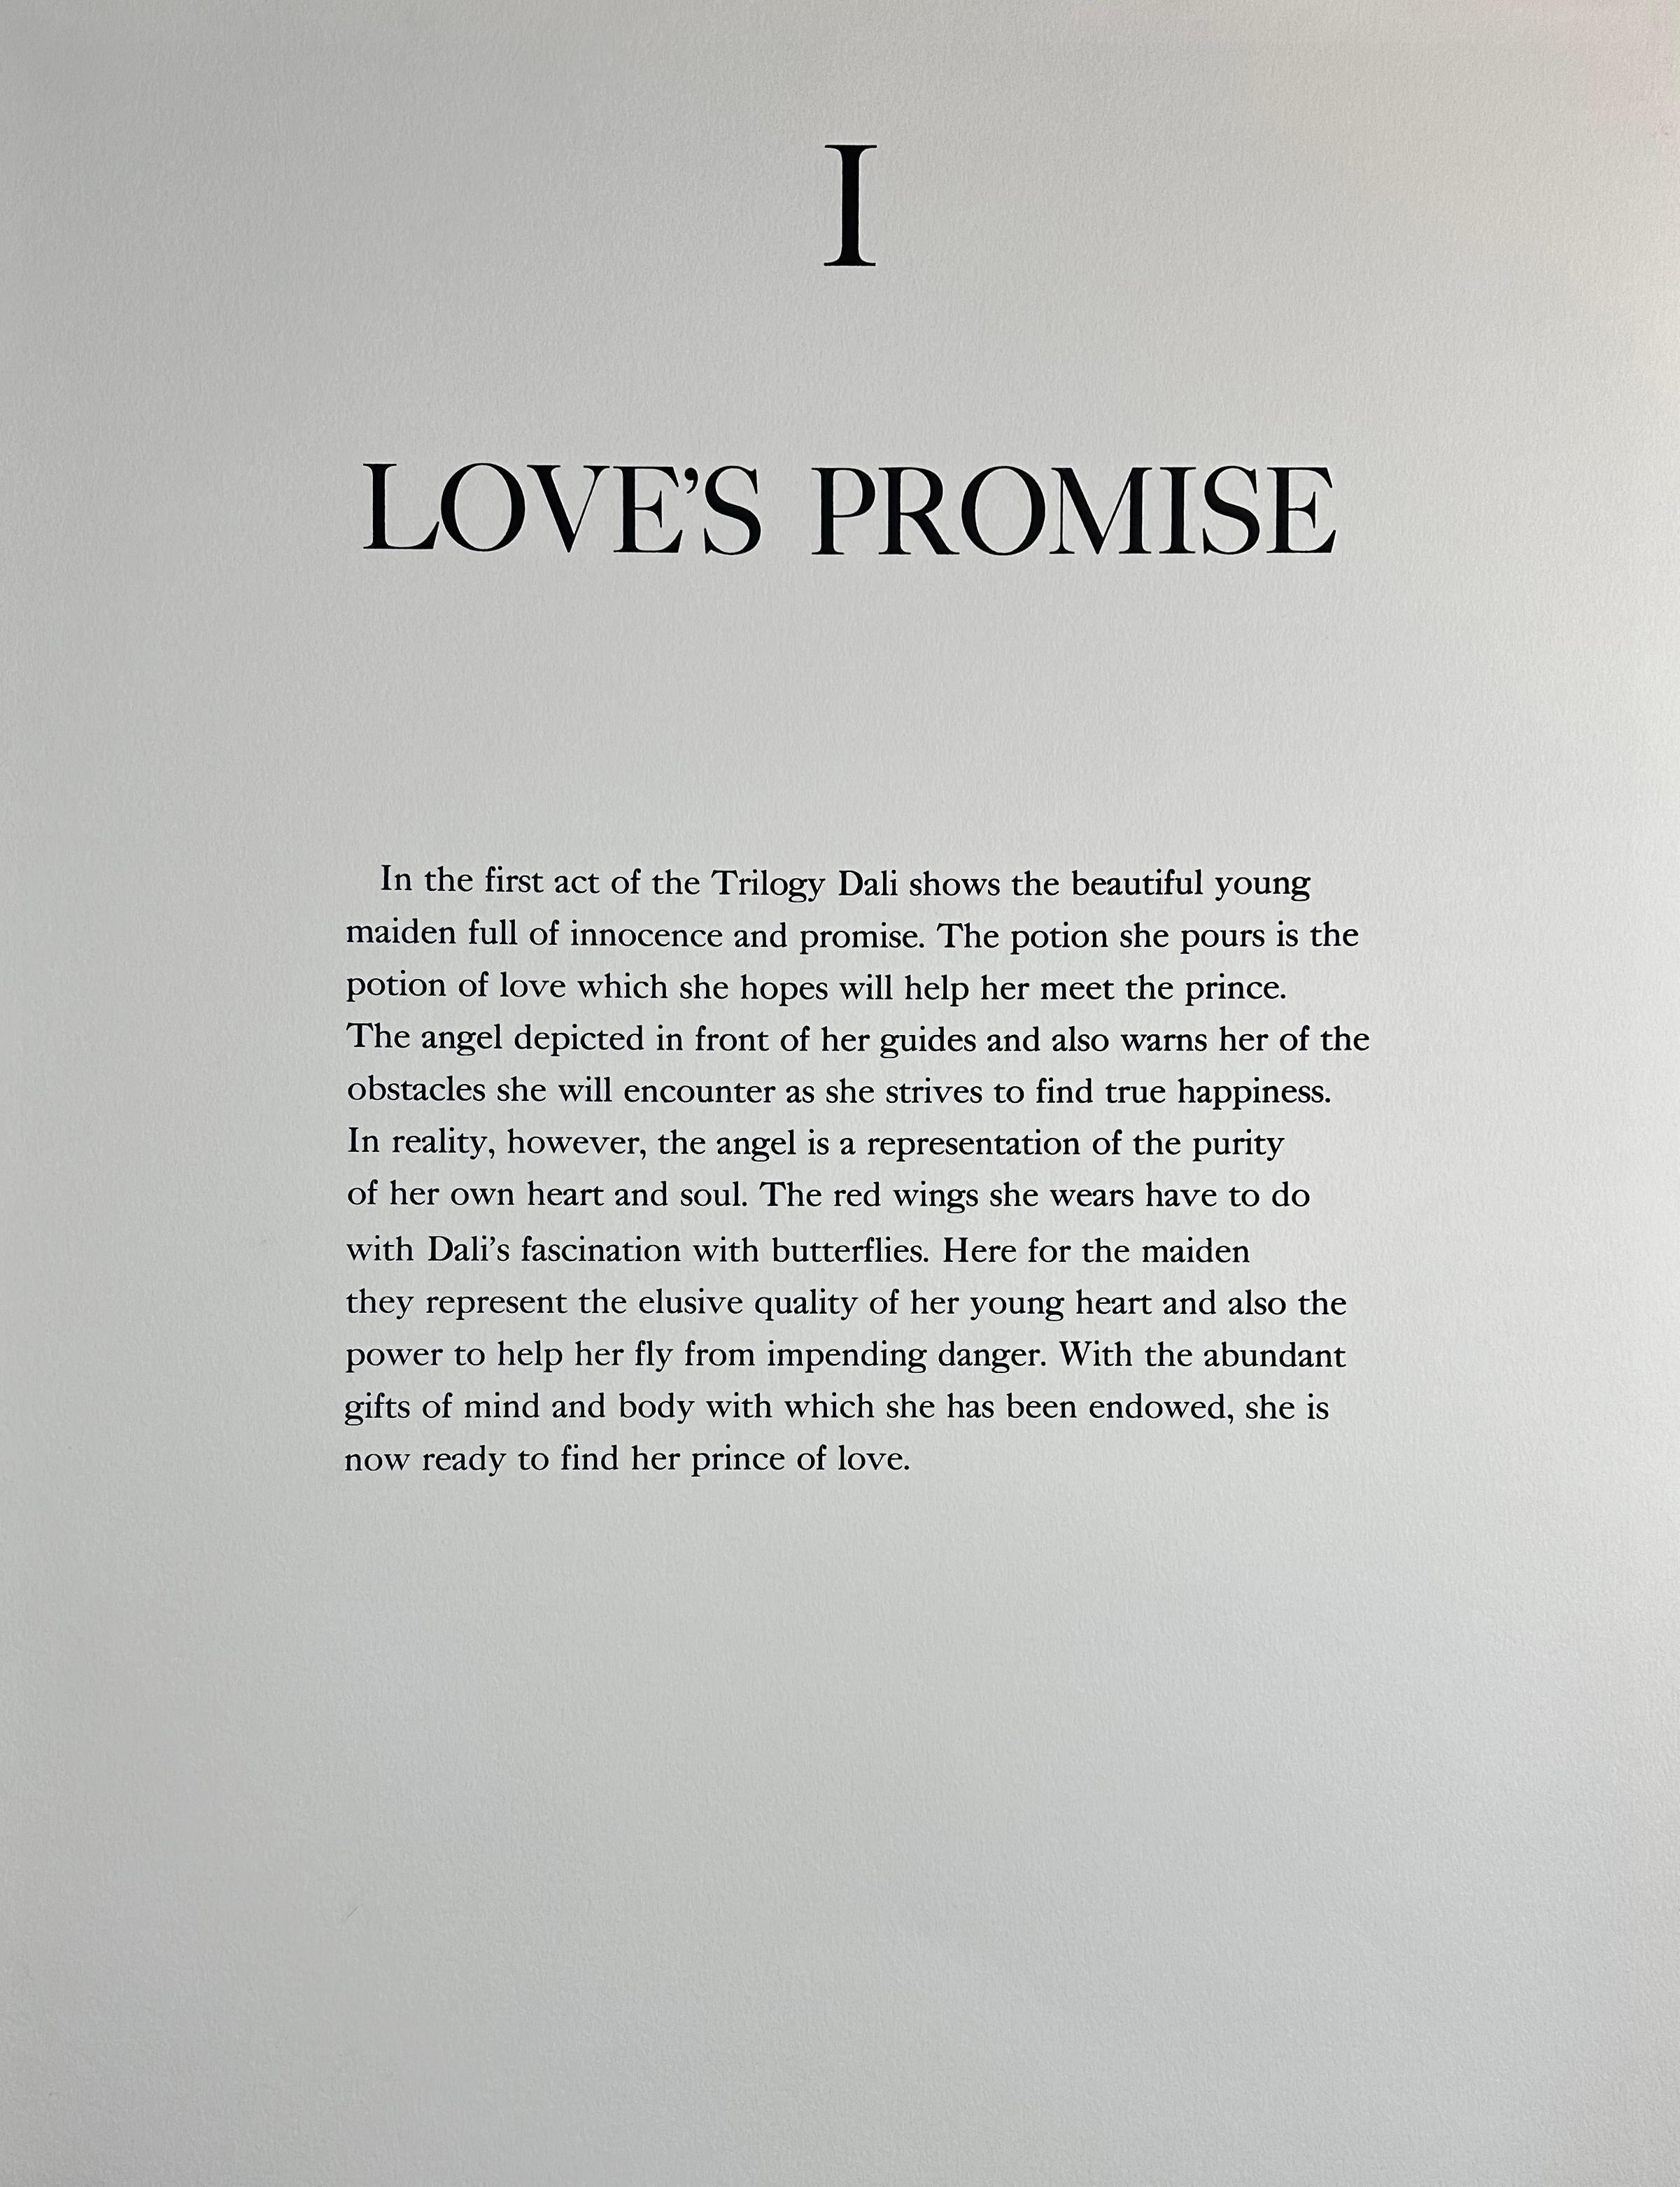 ARTIST: Salvador Dali

TITLE: Trilogy of Love Love's Promise

MEDIUM: Lithograph

SIGNED: Hand Signed by Salvador Dali

PUBLISHER: Levine & Levine New York

MEASUREMENTS: 2130